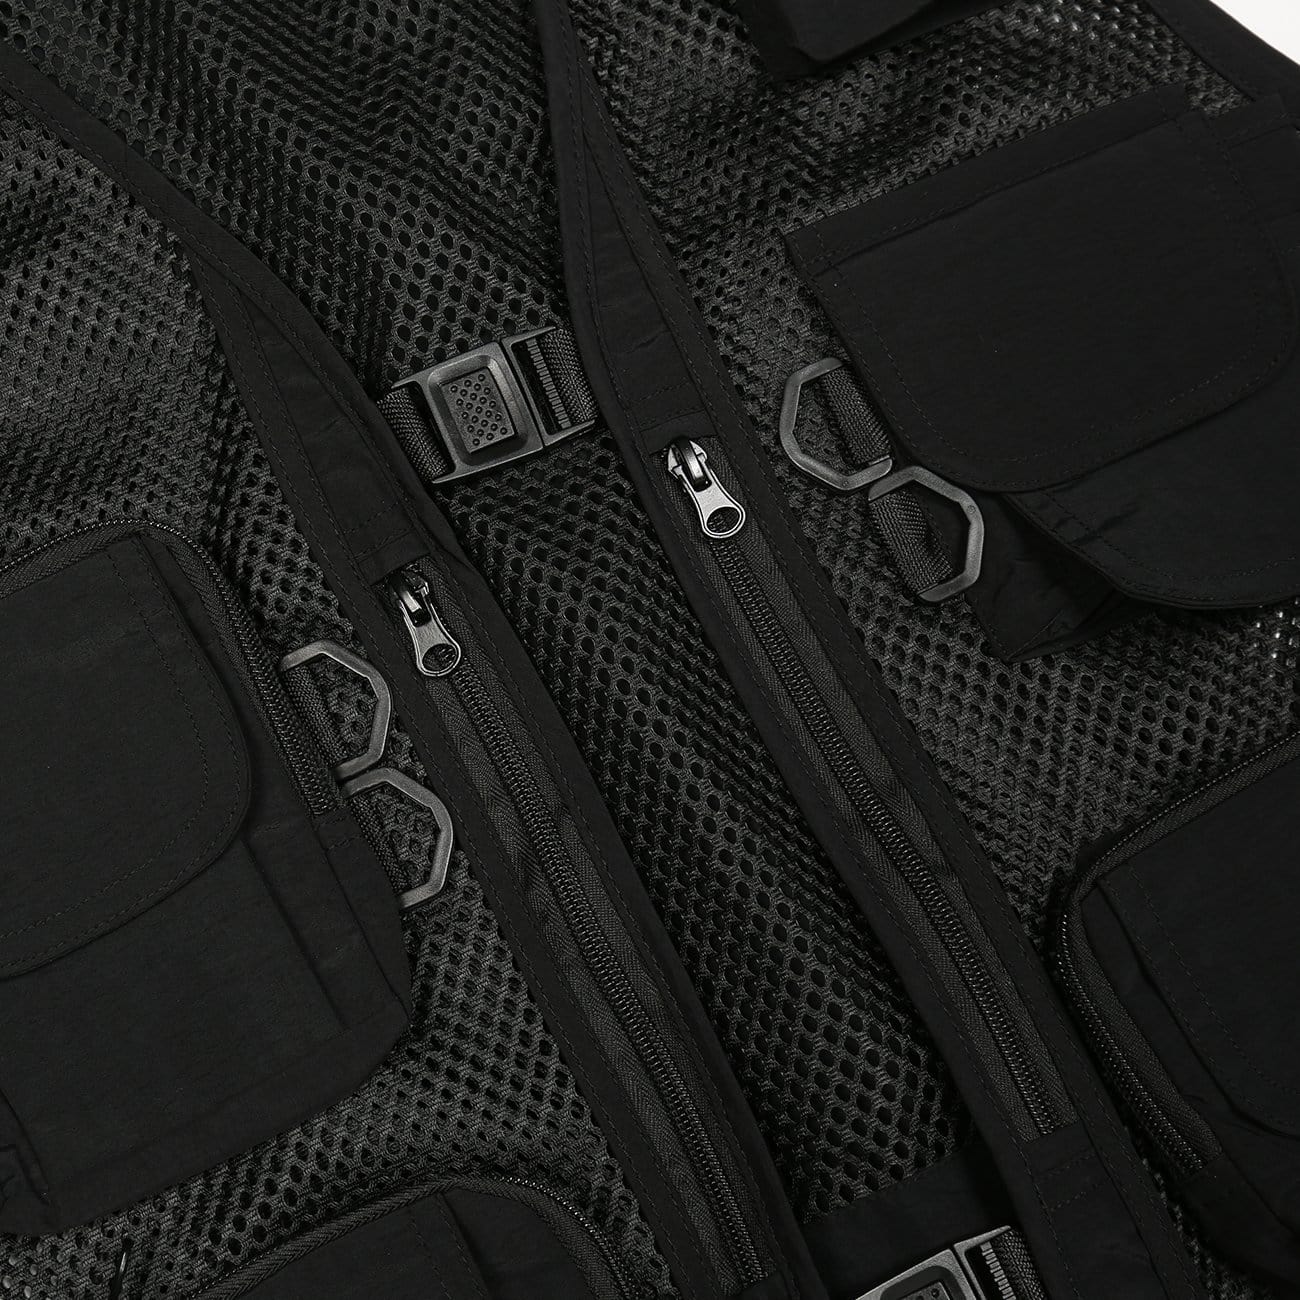 Function Grid Patchwork Multi Pockets Cardigan Jacket Vest Streetwear Brand Techwear Combat Tactical YUGEN THEORY